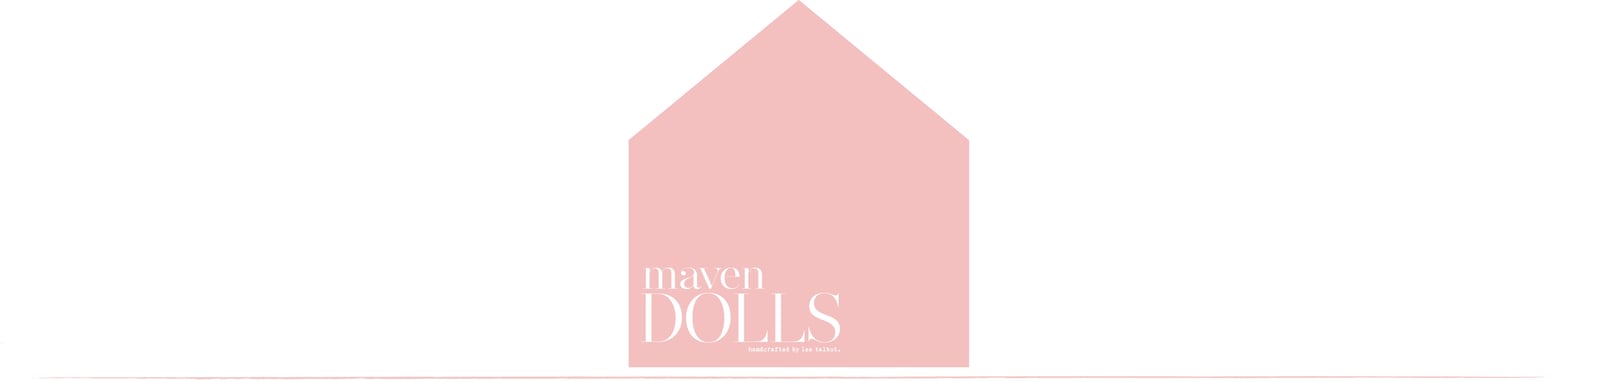 Maven Dolls